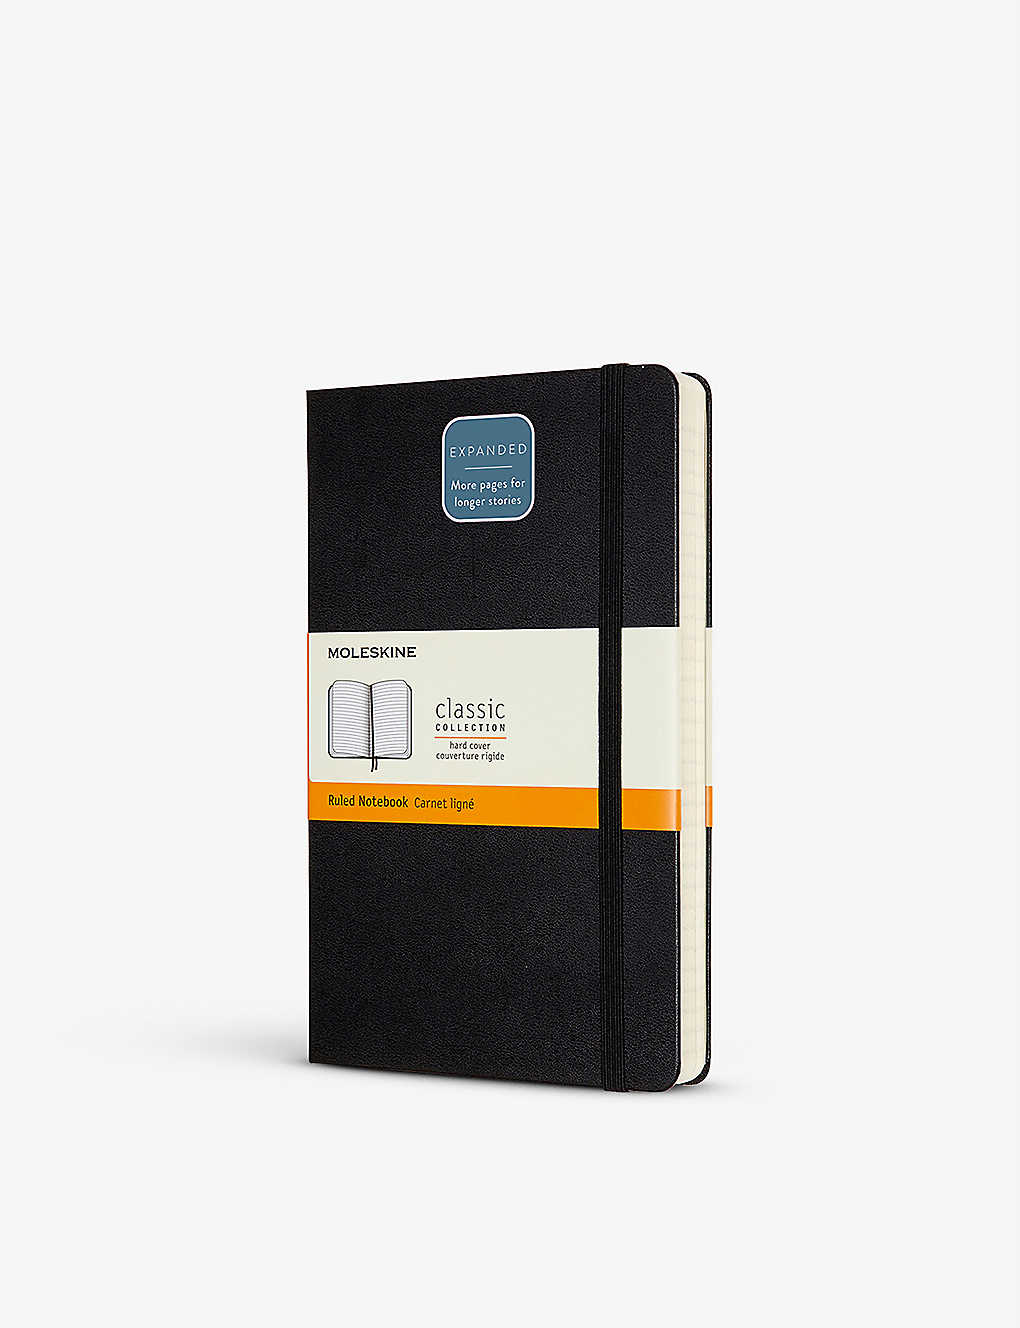 MOLESKINE クラシック エクスパンド ルール ノートブック 13cm x21cm Classic Expanded ruled notebook 13cm x 21cm